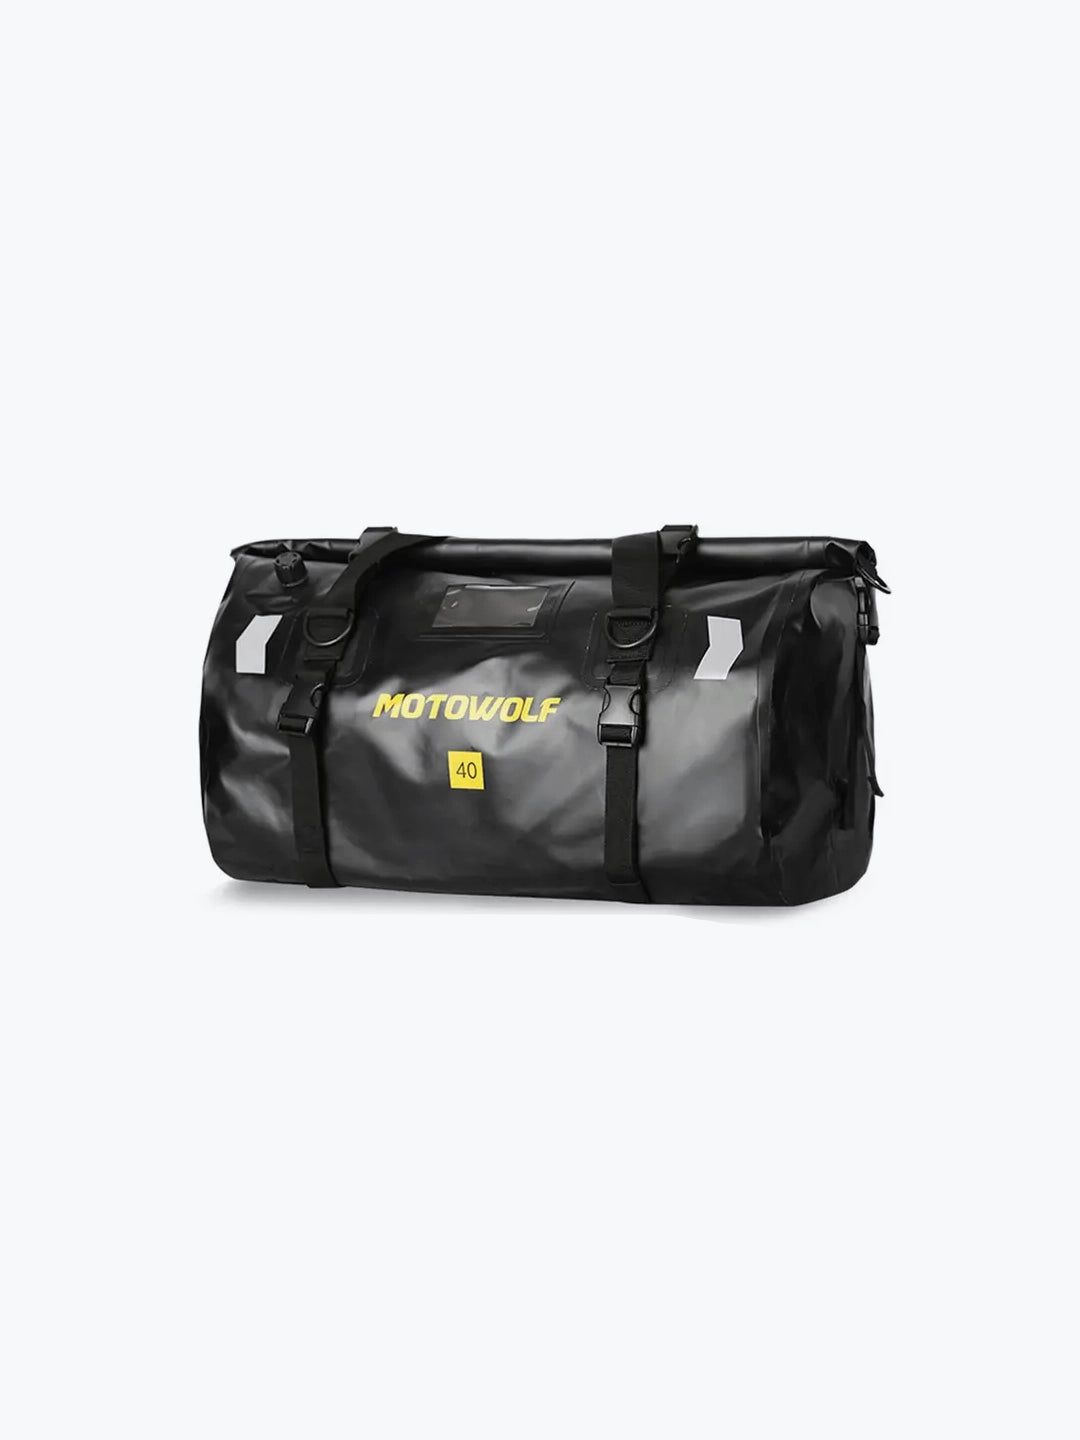 Motowolf Travel Bag Black 0717 40Ltr